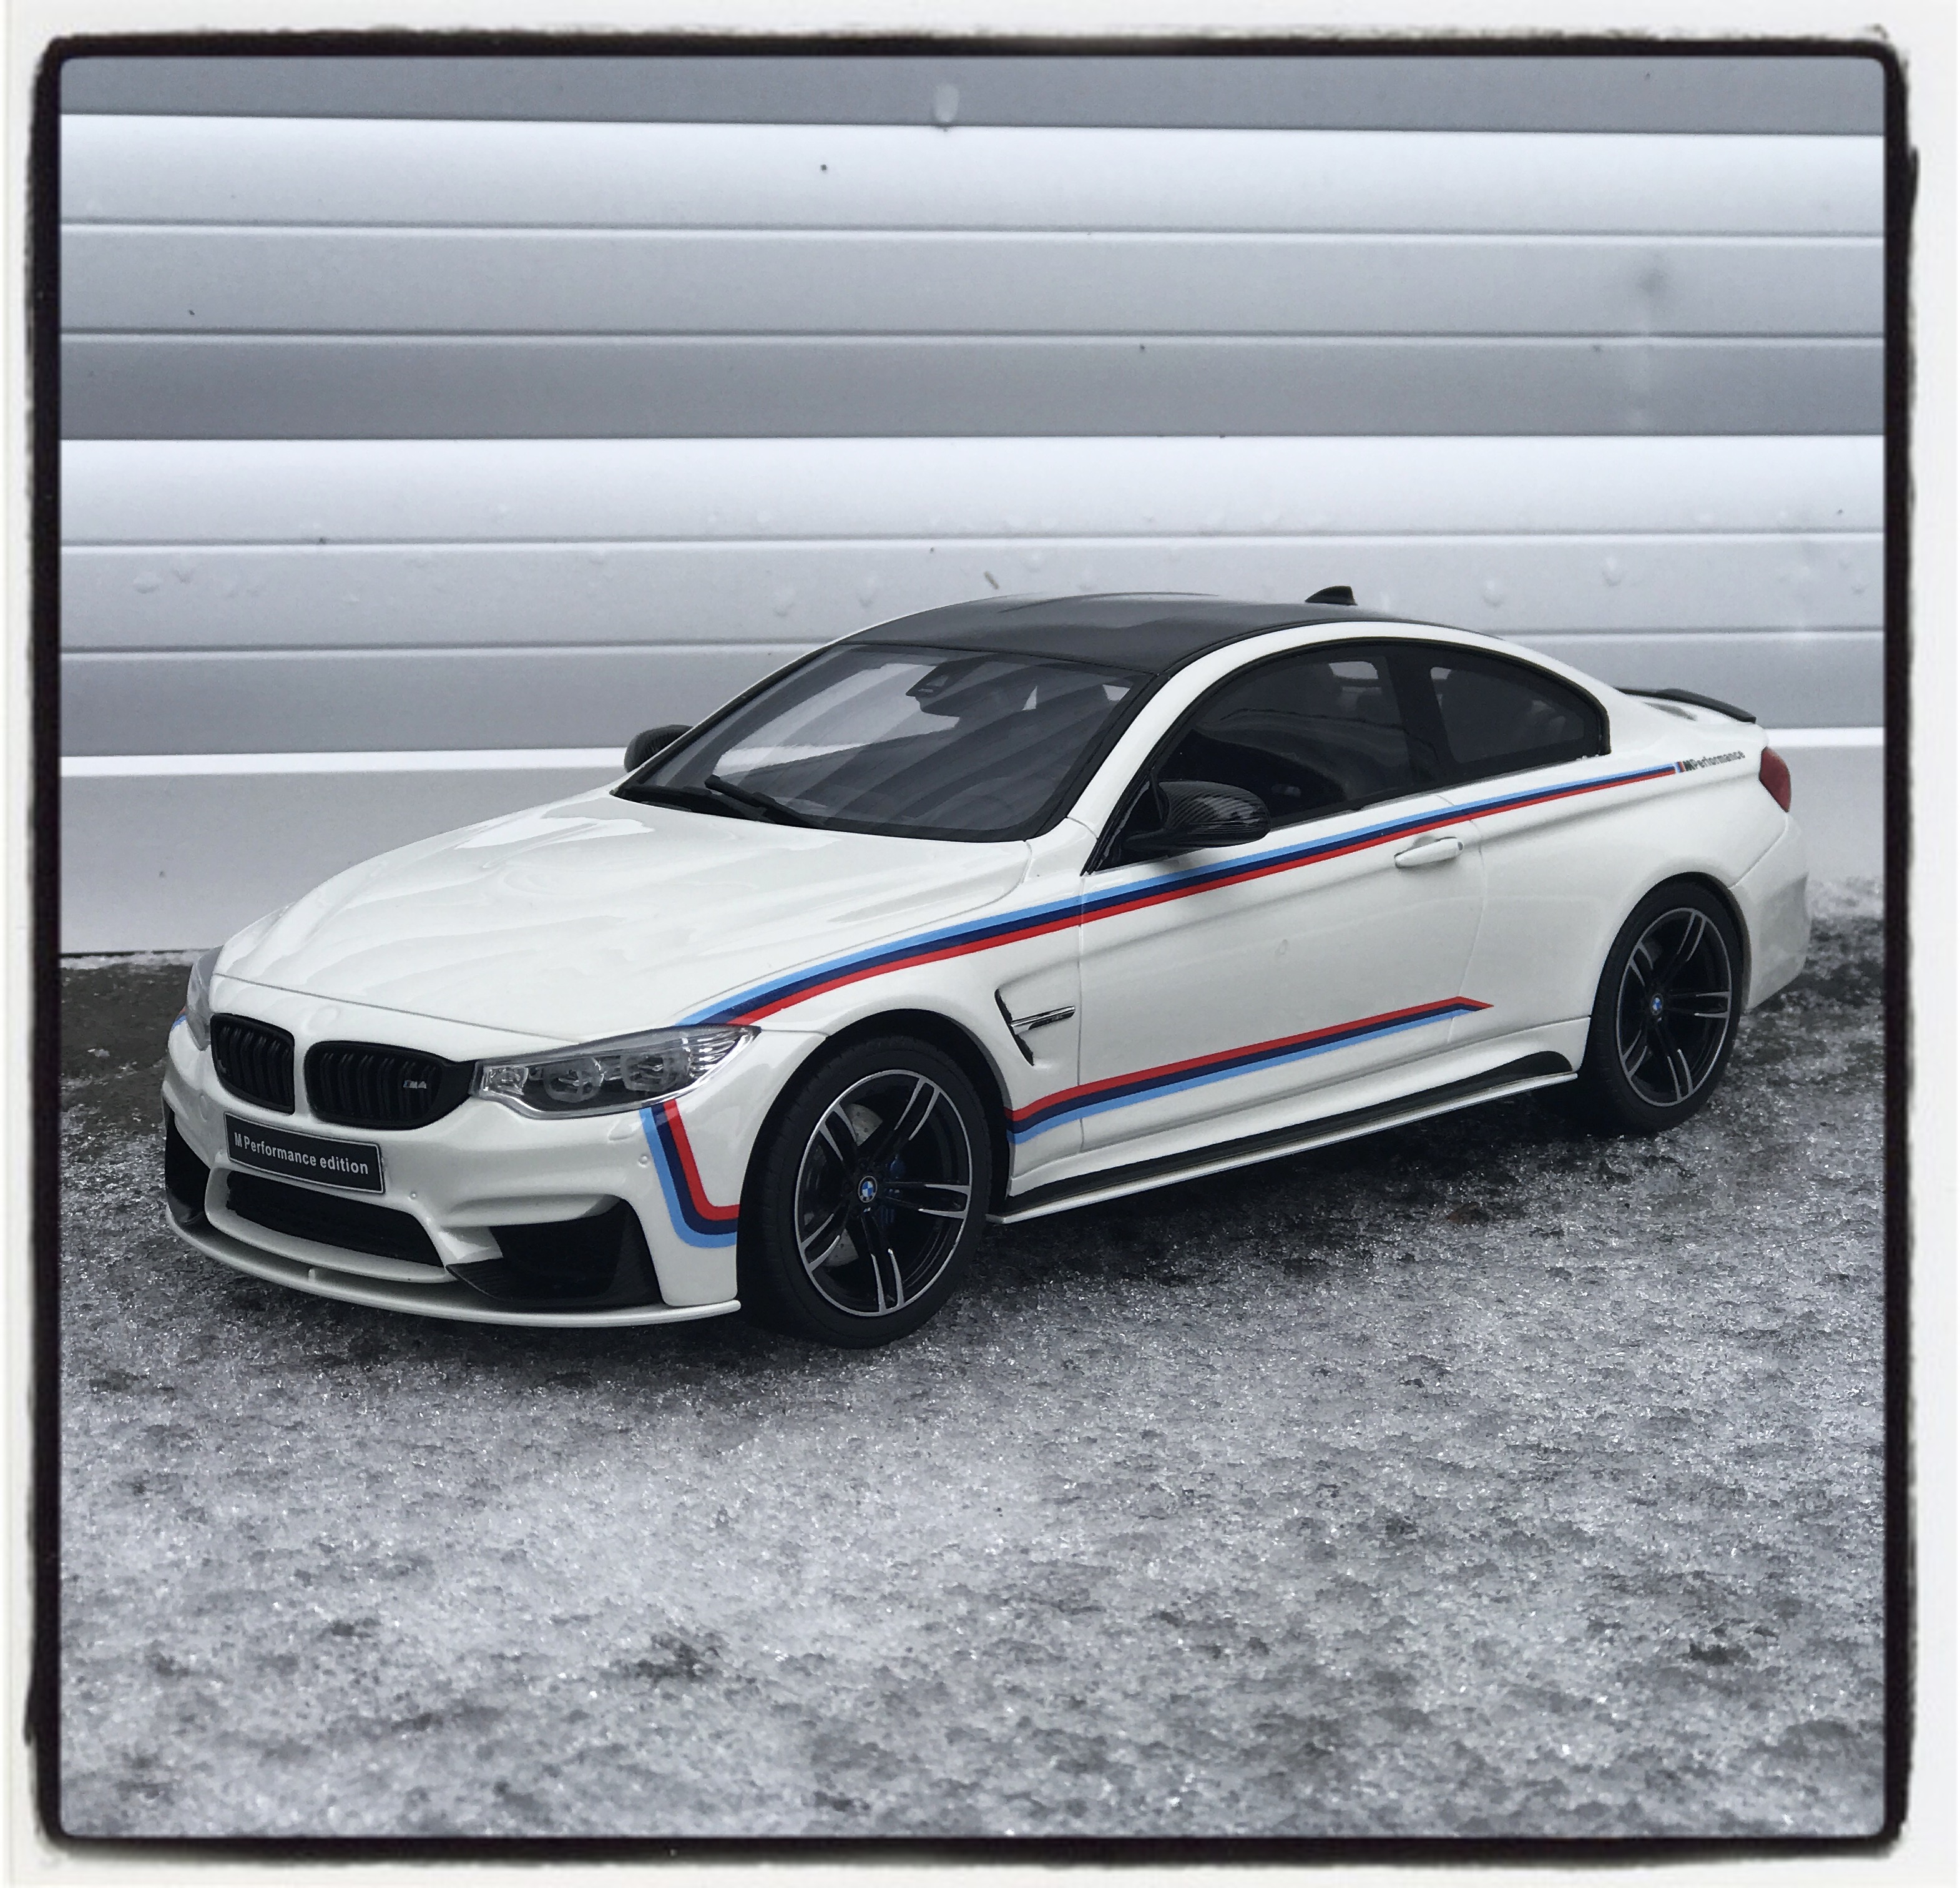 BMW M4 (F82) M Performance edition (gt spirit)